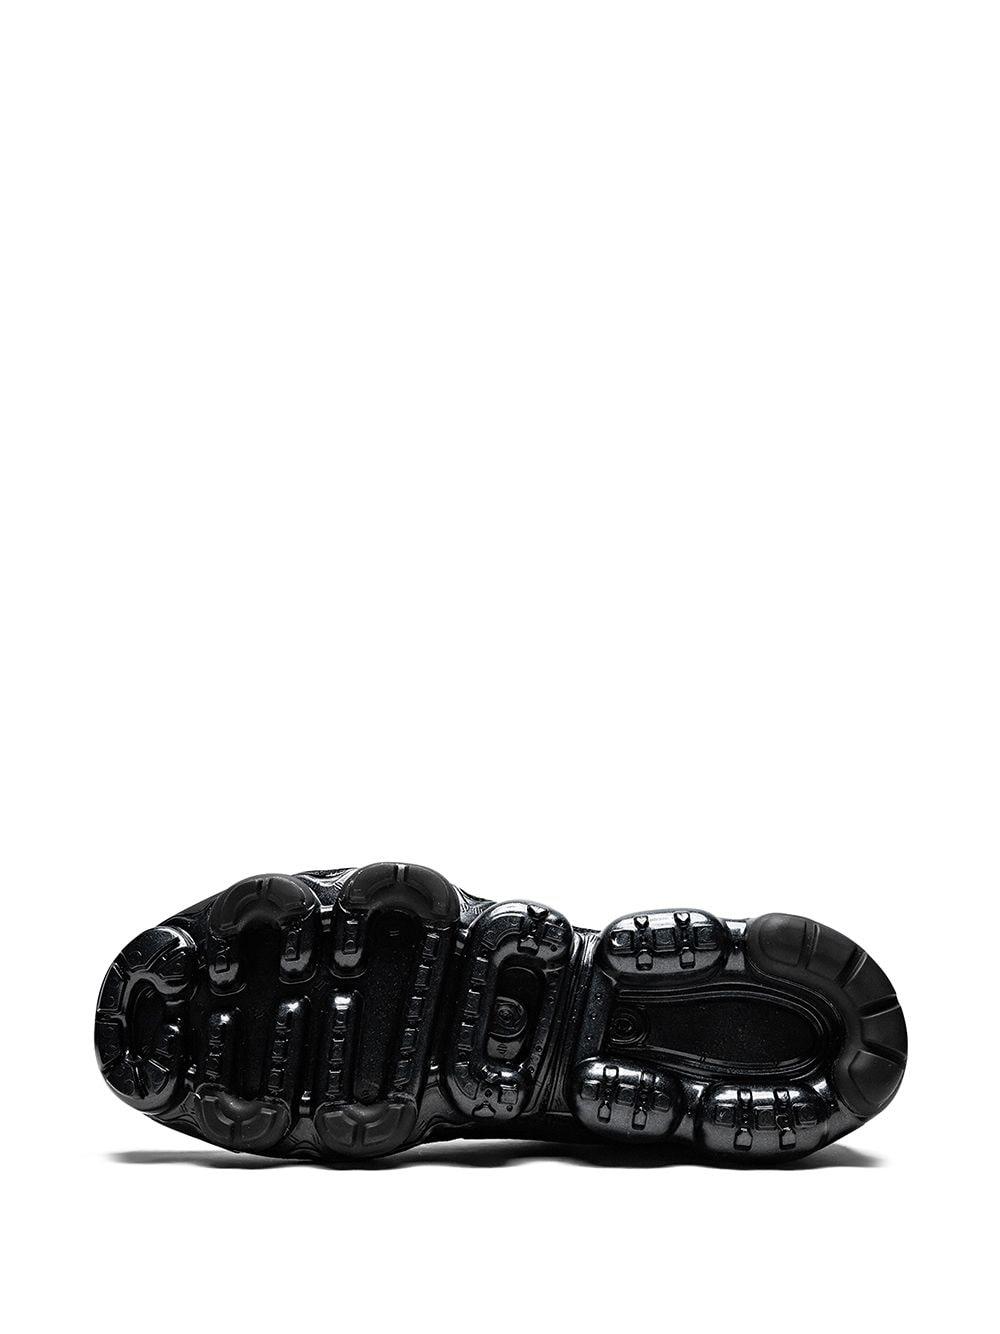 Nike Air Vapormax Flyknit 3 Sneakers in Black | Lyst